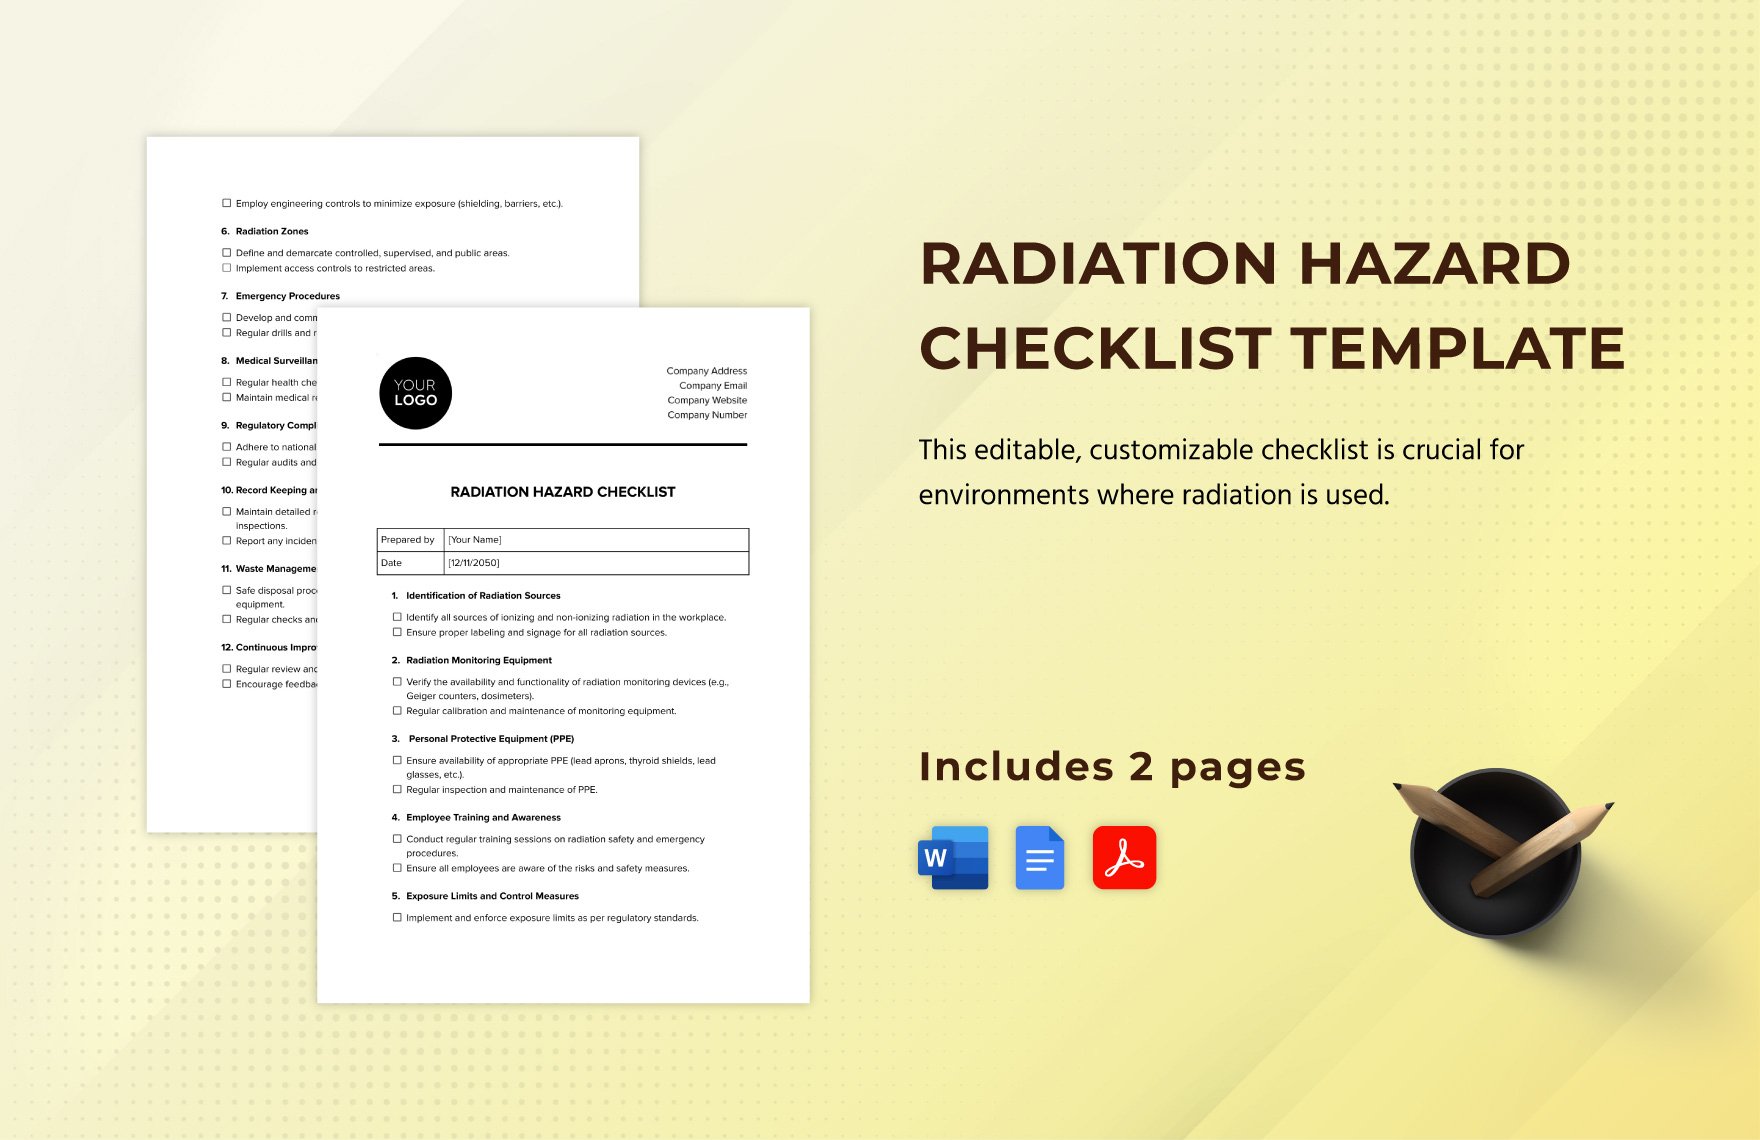 Radiation Hazard Checklist Template in Word, Google Docs, PDF